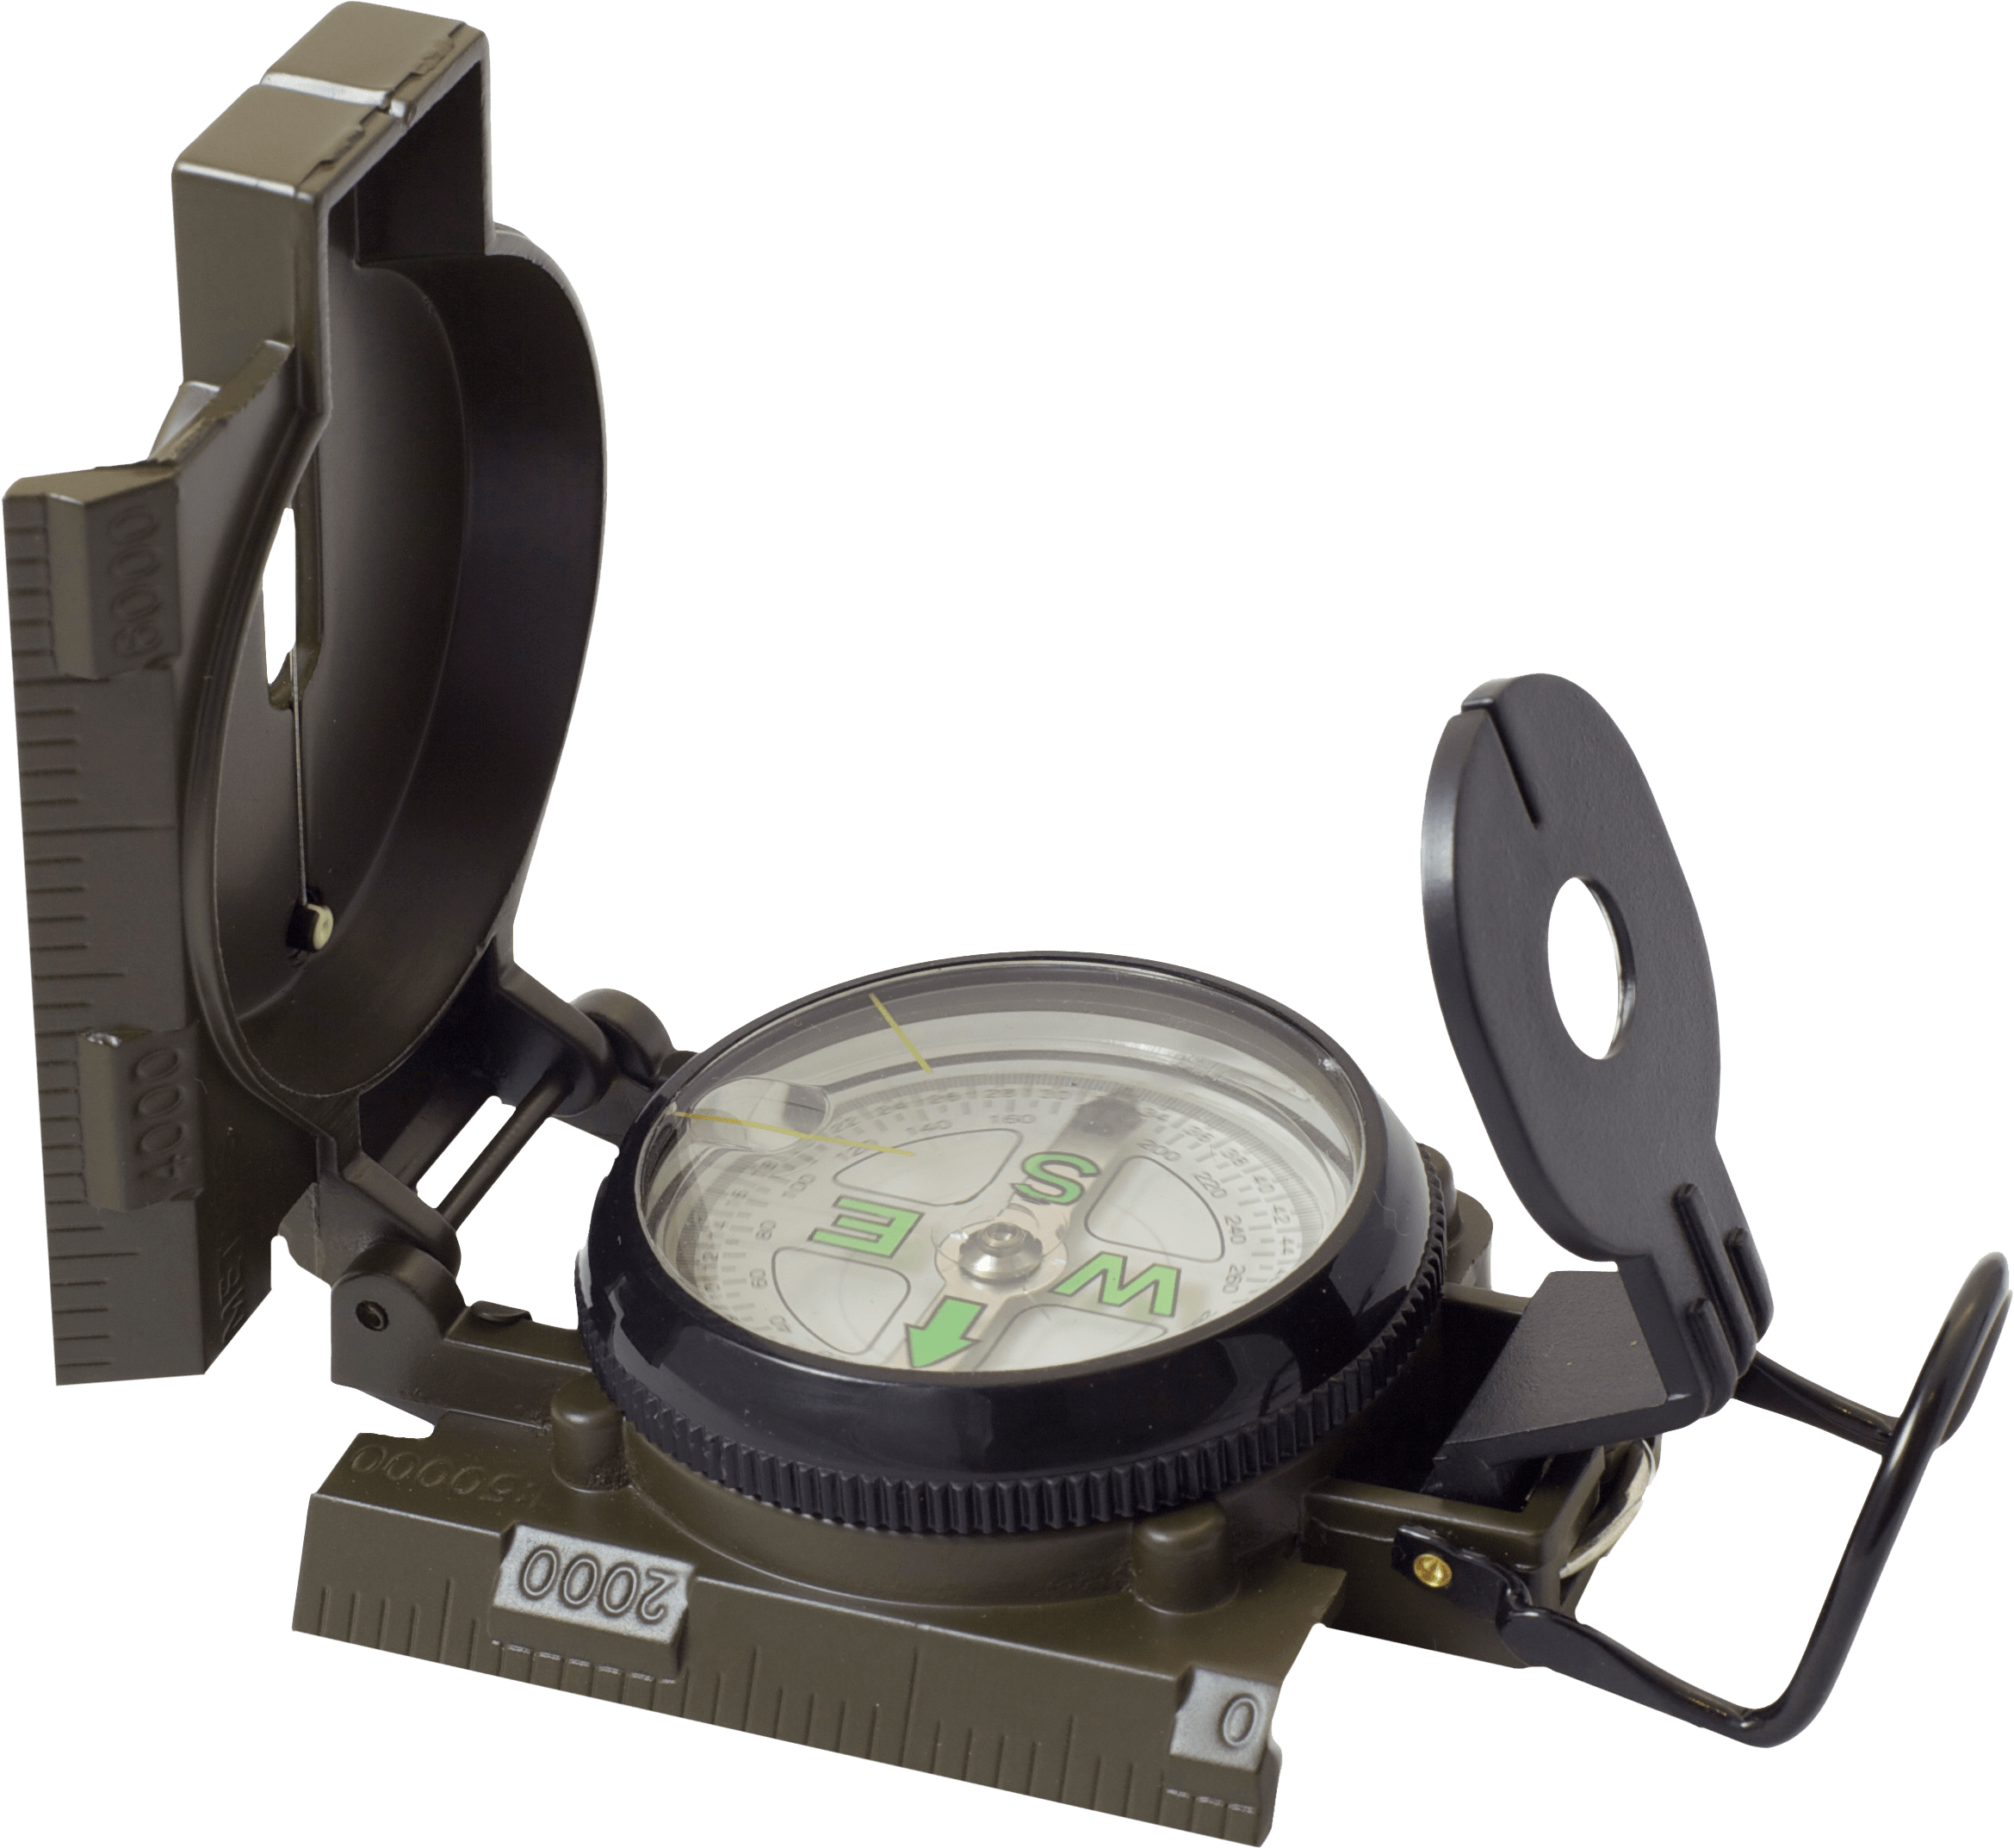 Humvee Accessories Hmvcompassod Military Compass Black - Humvee Hmv-compass-od Military Style Compass (2472x2241), Png Download